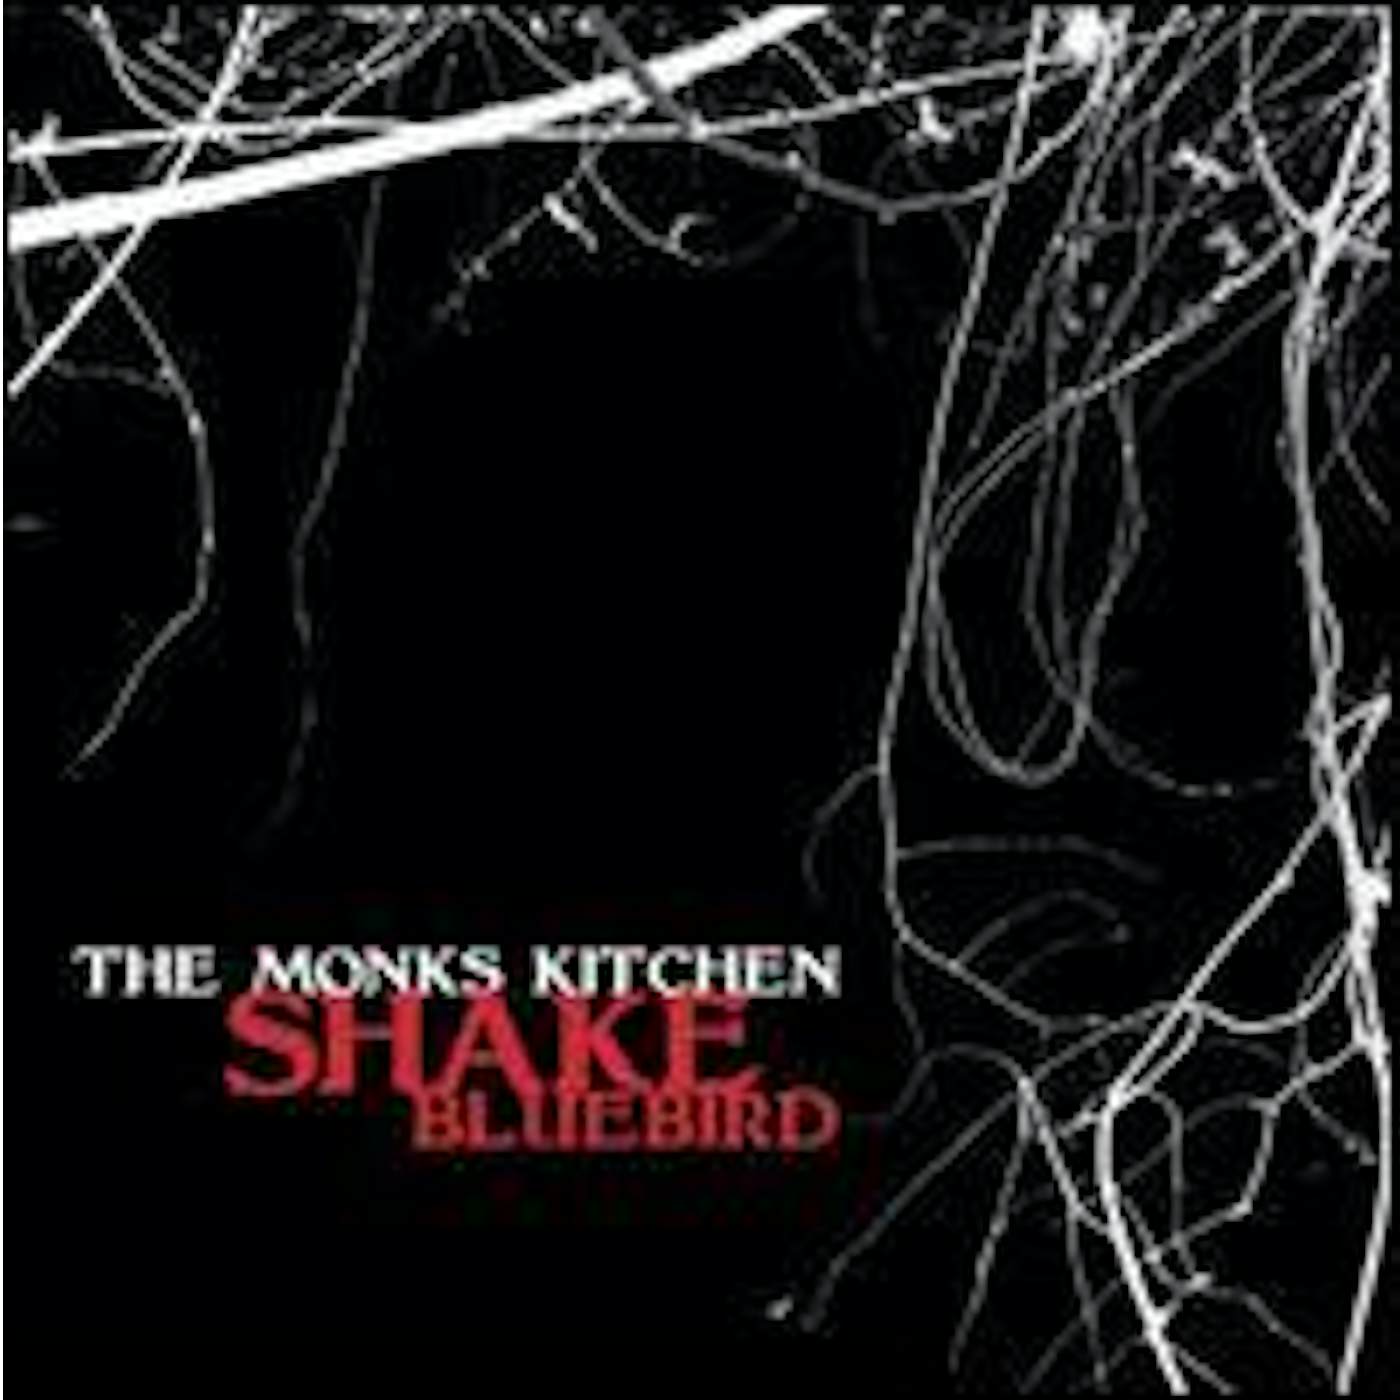 The Monks Kitchen Shake / Bluebird Vinyl Record